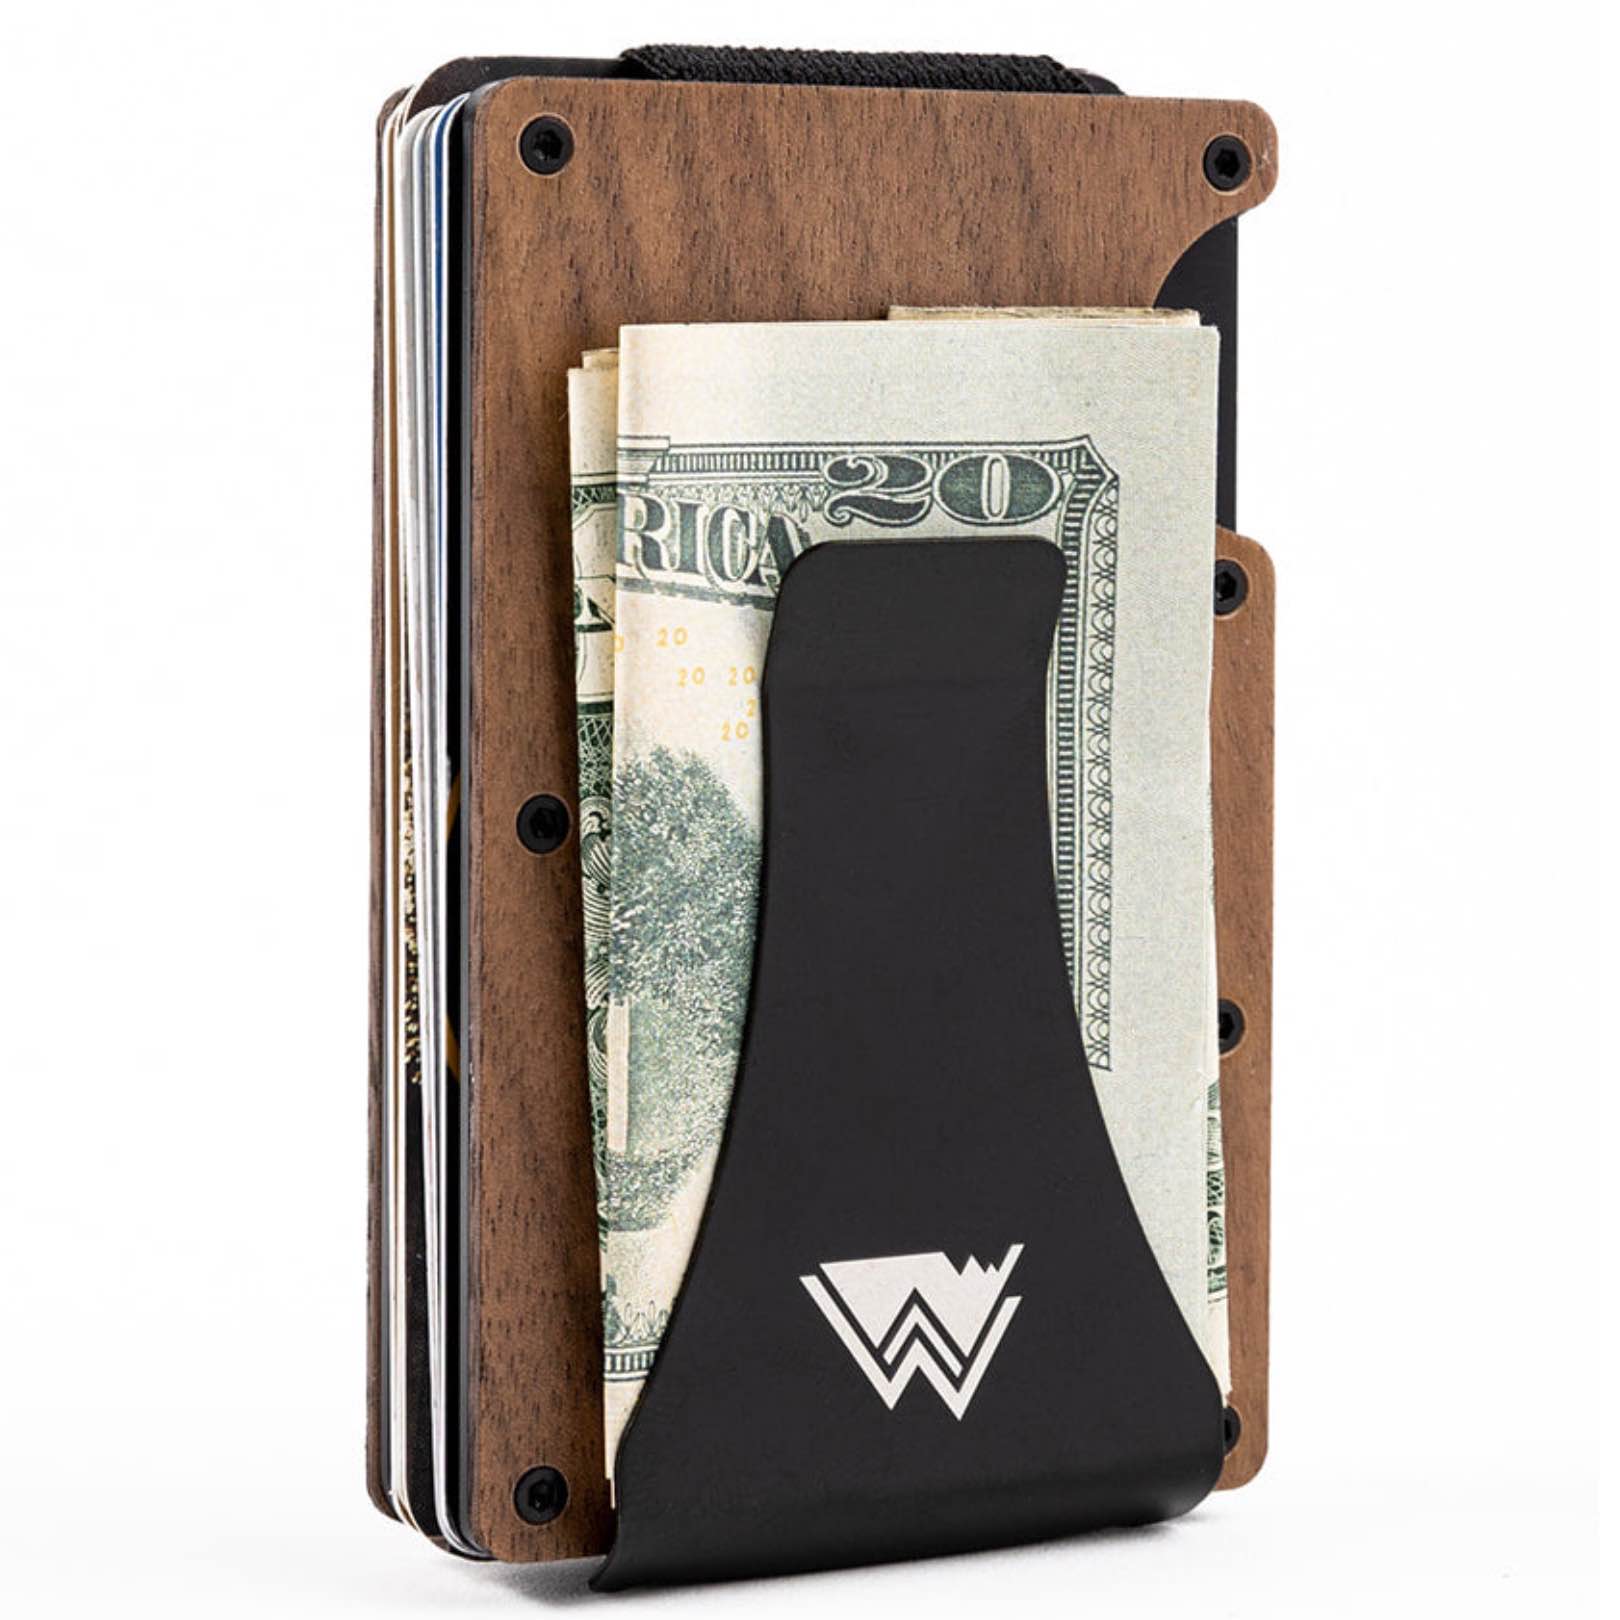 mountain-voyage-co-walnut-wood-rfid-blocking-slim-wallet-with-cash